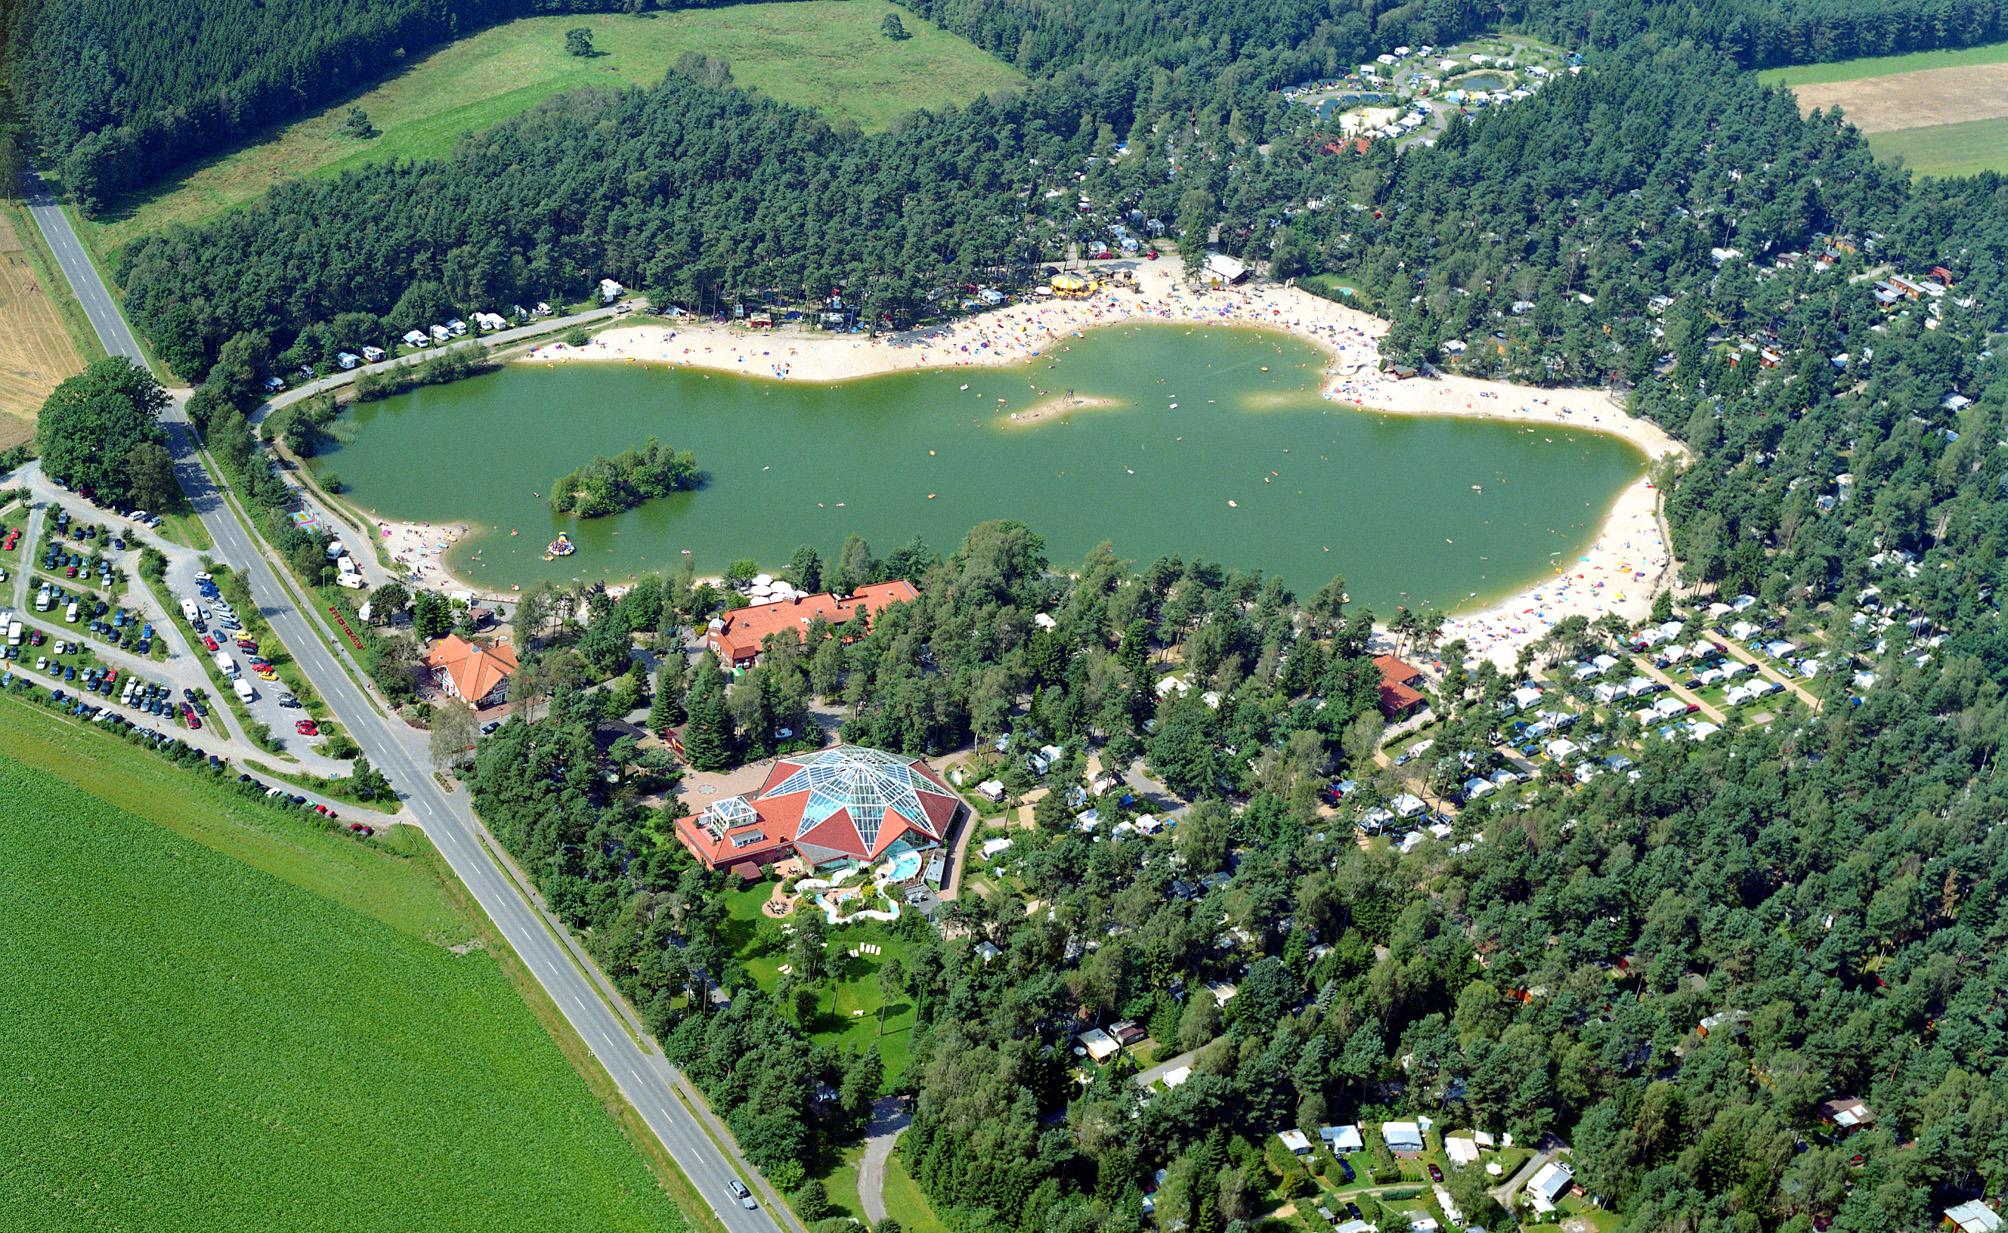 Südsee-Camp